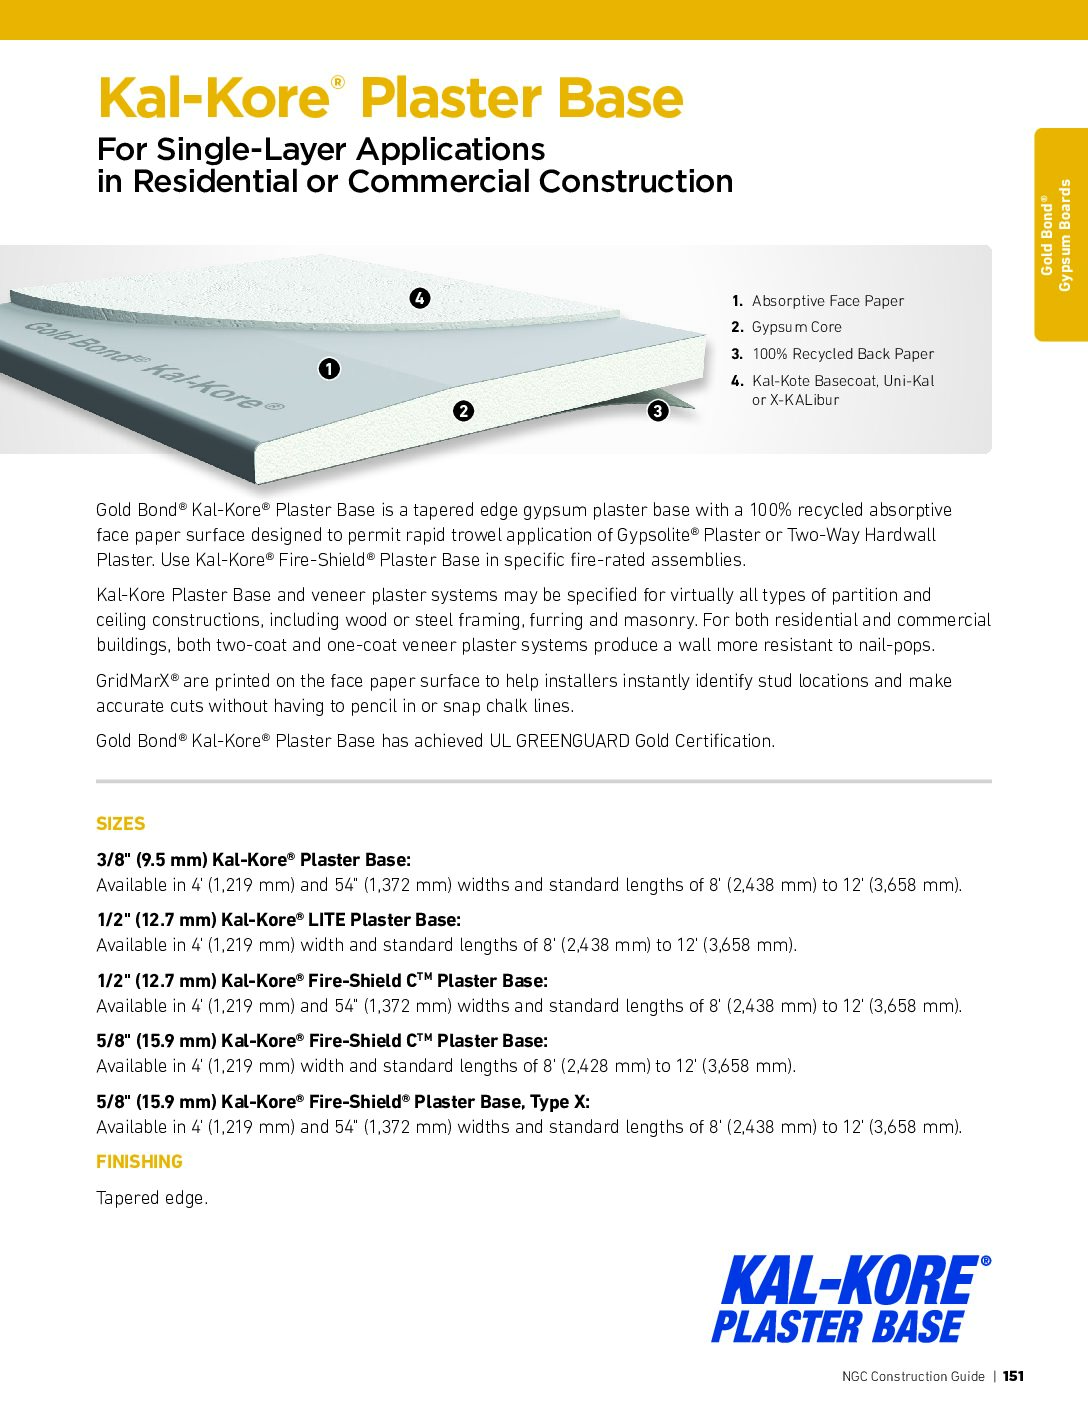 Gold Bond Kal-Kore Plaster Base NGC Construction Guide - Document Screen Grab